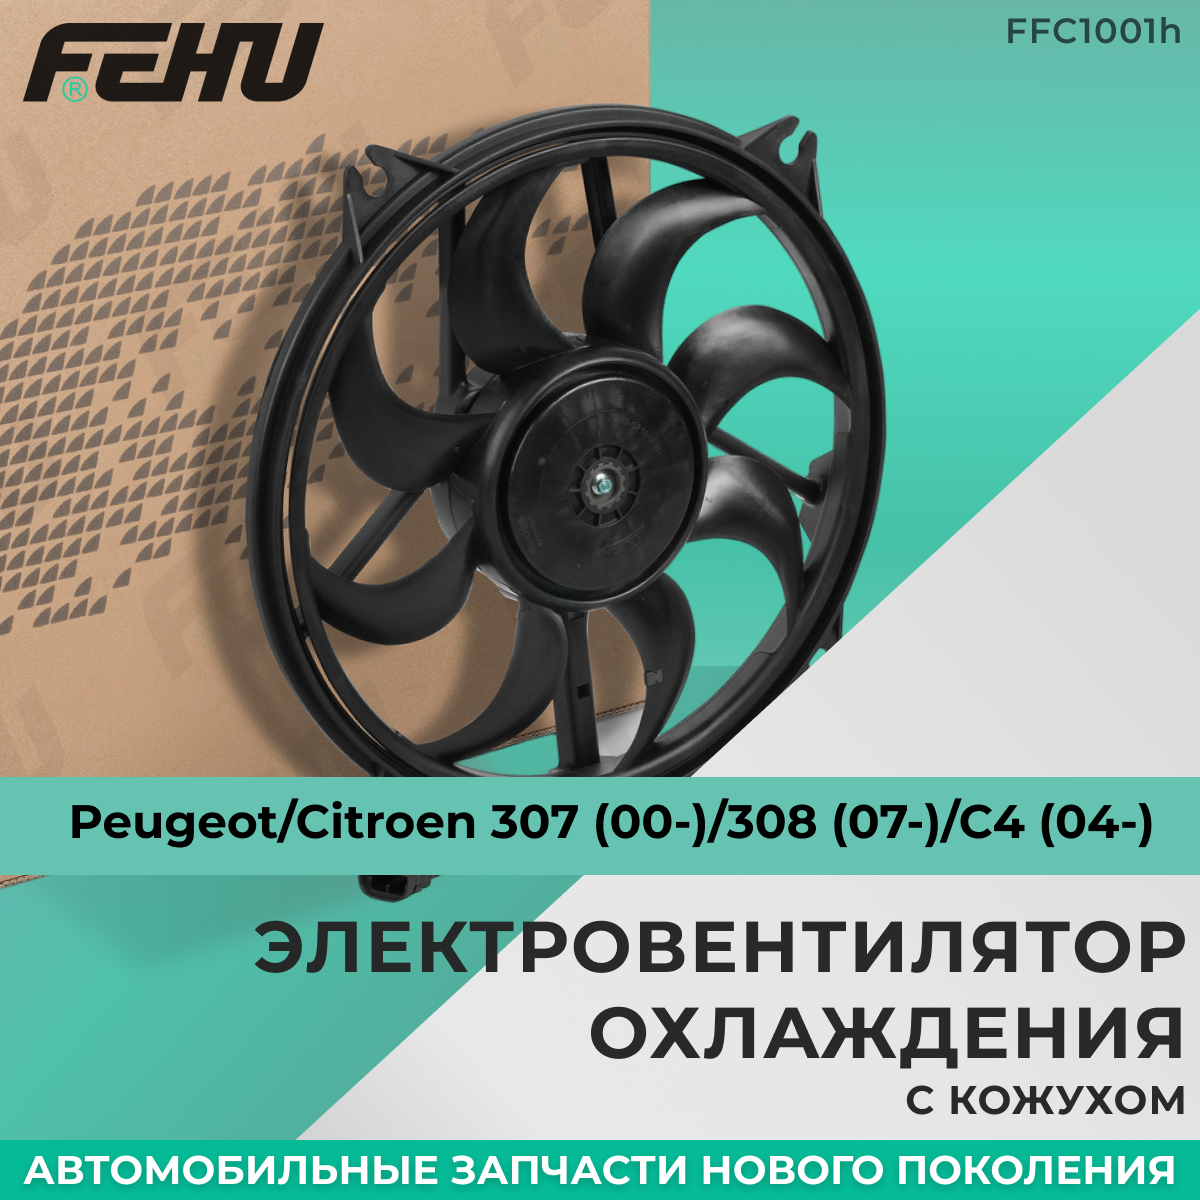 Электровентилятор охлаждения FEHU (феху) с кожухом Peugeot/Citroen 307 (00-)/308 (07-)/C4 (04-)/Пежо/Ситроен арт.